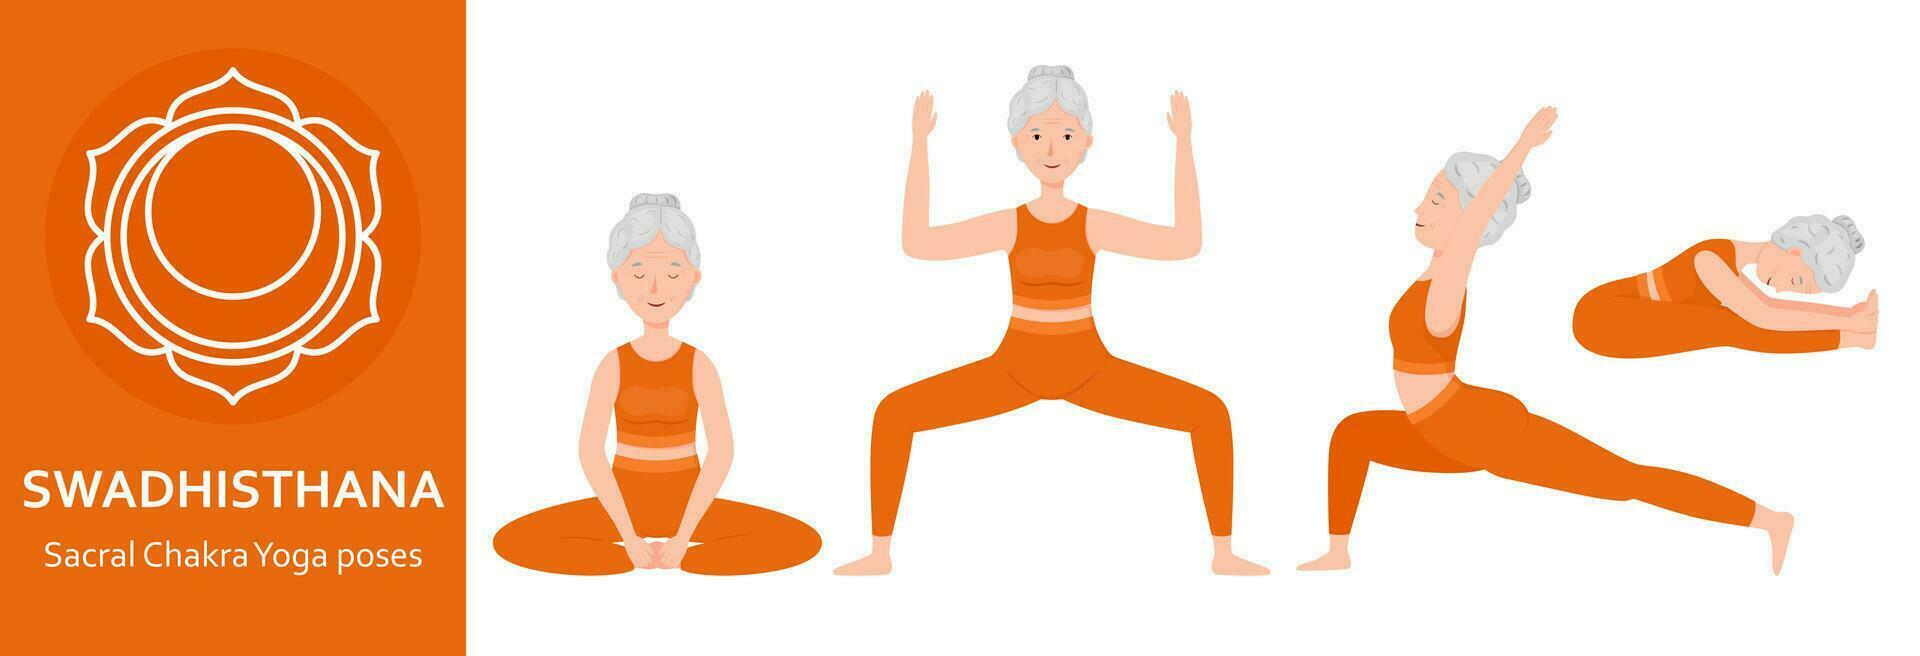 sacraal chakra yoga poseert. ouderen vrouw beoefenen swadhisthana chakra yoga asana. gezond levensstijl. vlak tekenfilm karakter. vector illustratie